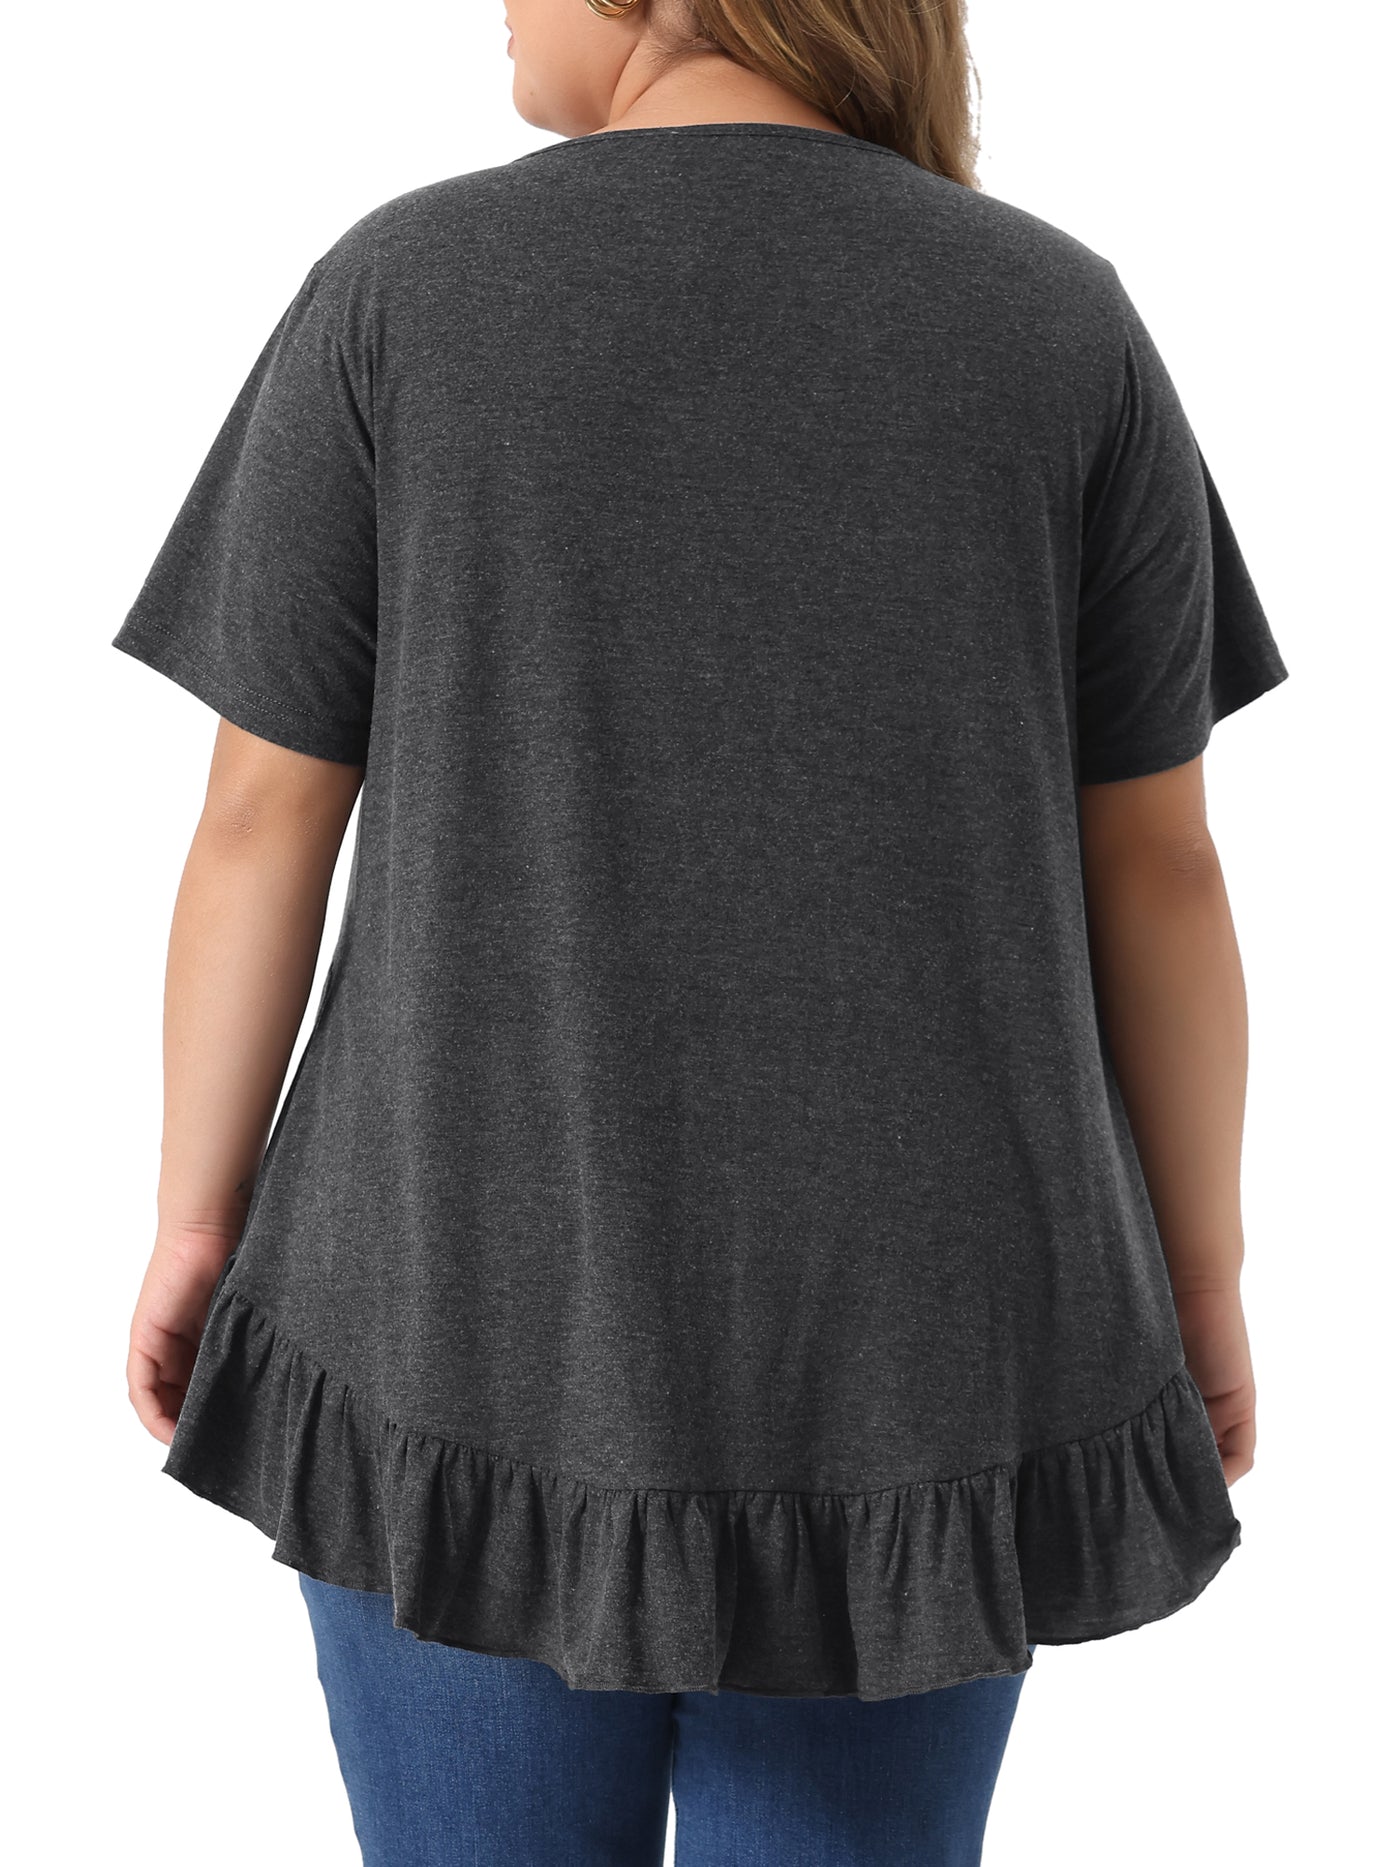 Bublédon Plus Size T Shirts for Women V Neck Button Up Short Sleeve Ruffled Hem Blouse Tops